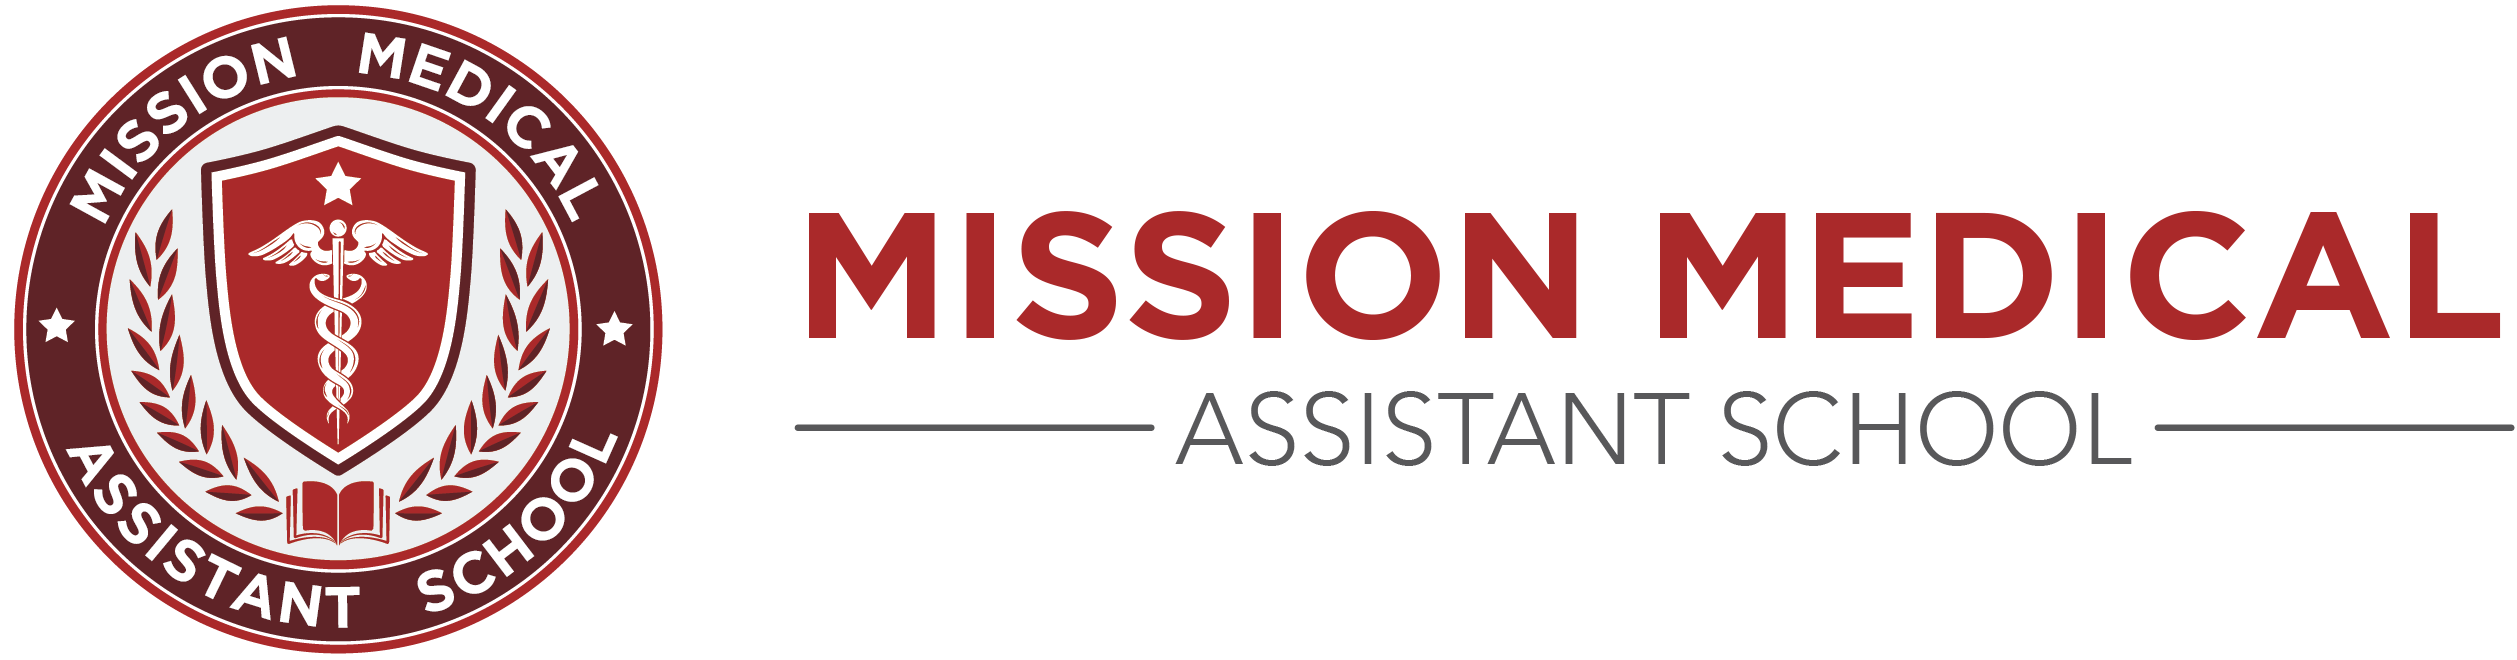 Mission Medical Assistant School Logo